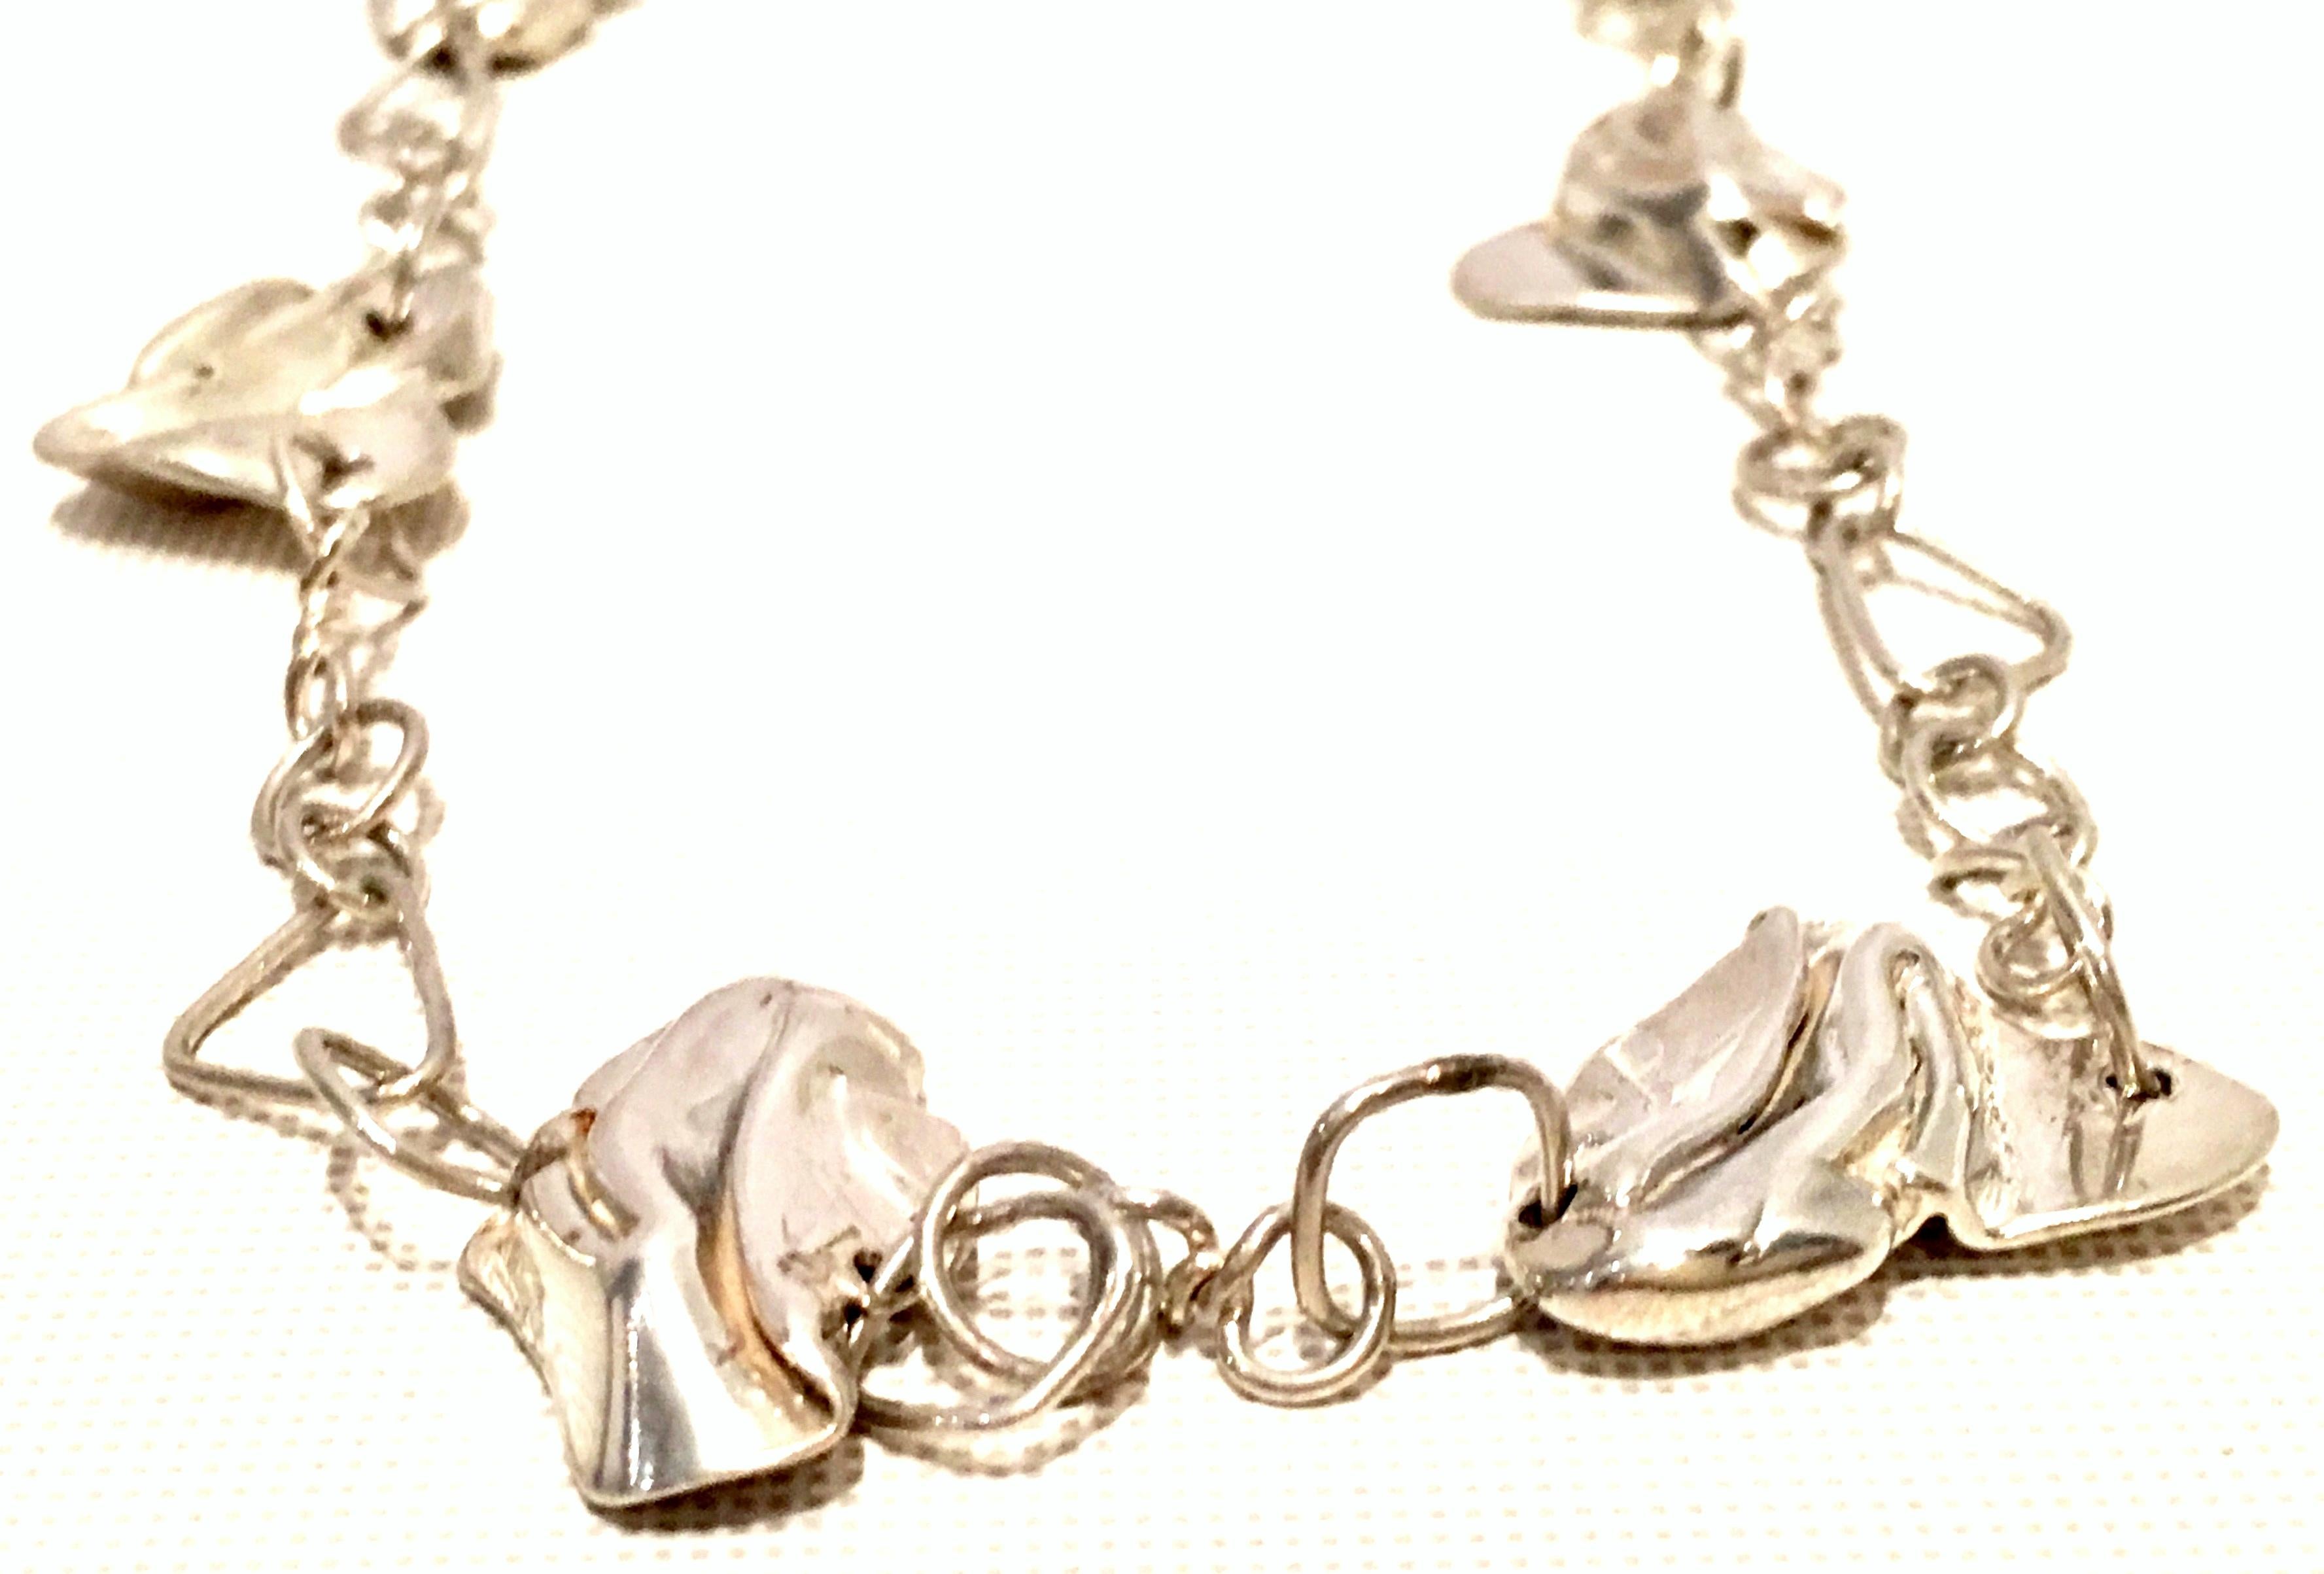 Vintage Sterling Silver Modernist Organic Form Chain Link Necklace For Sale 4